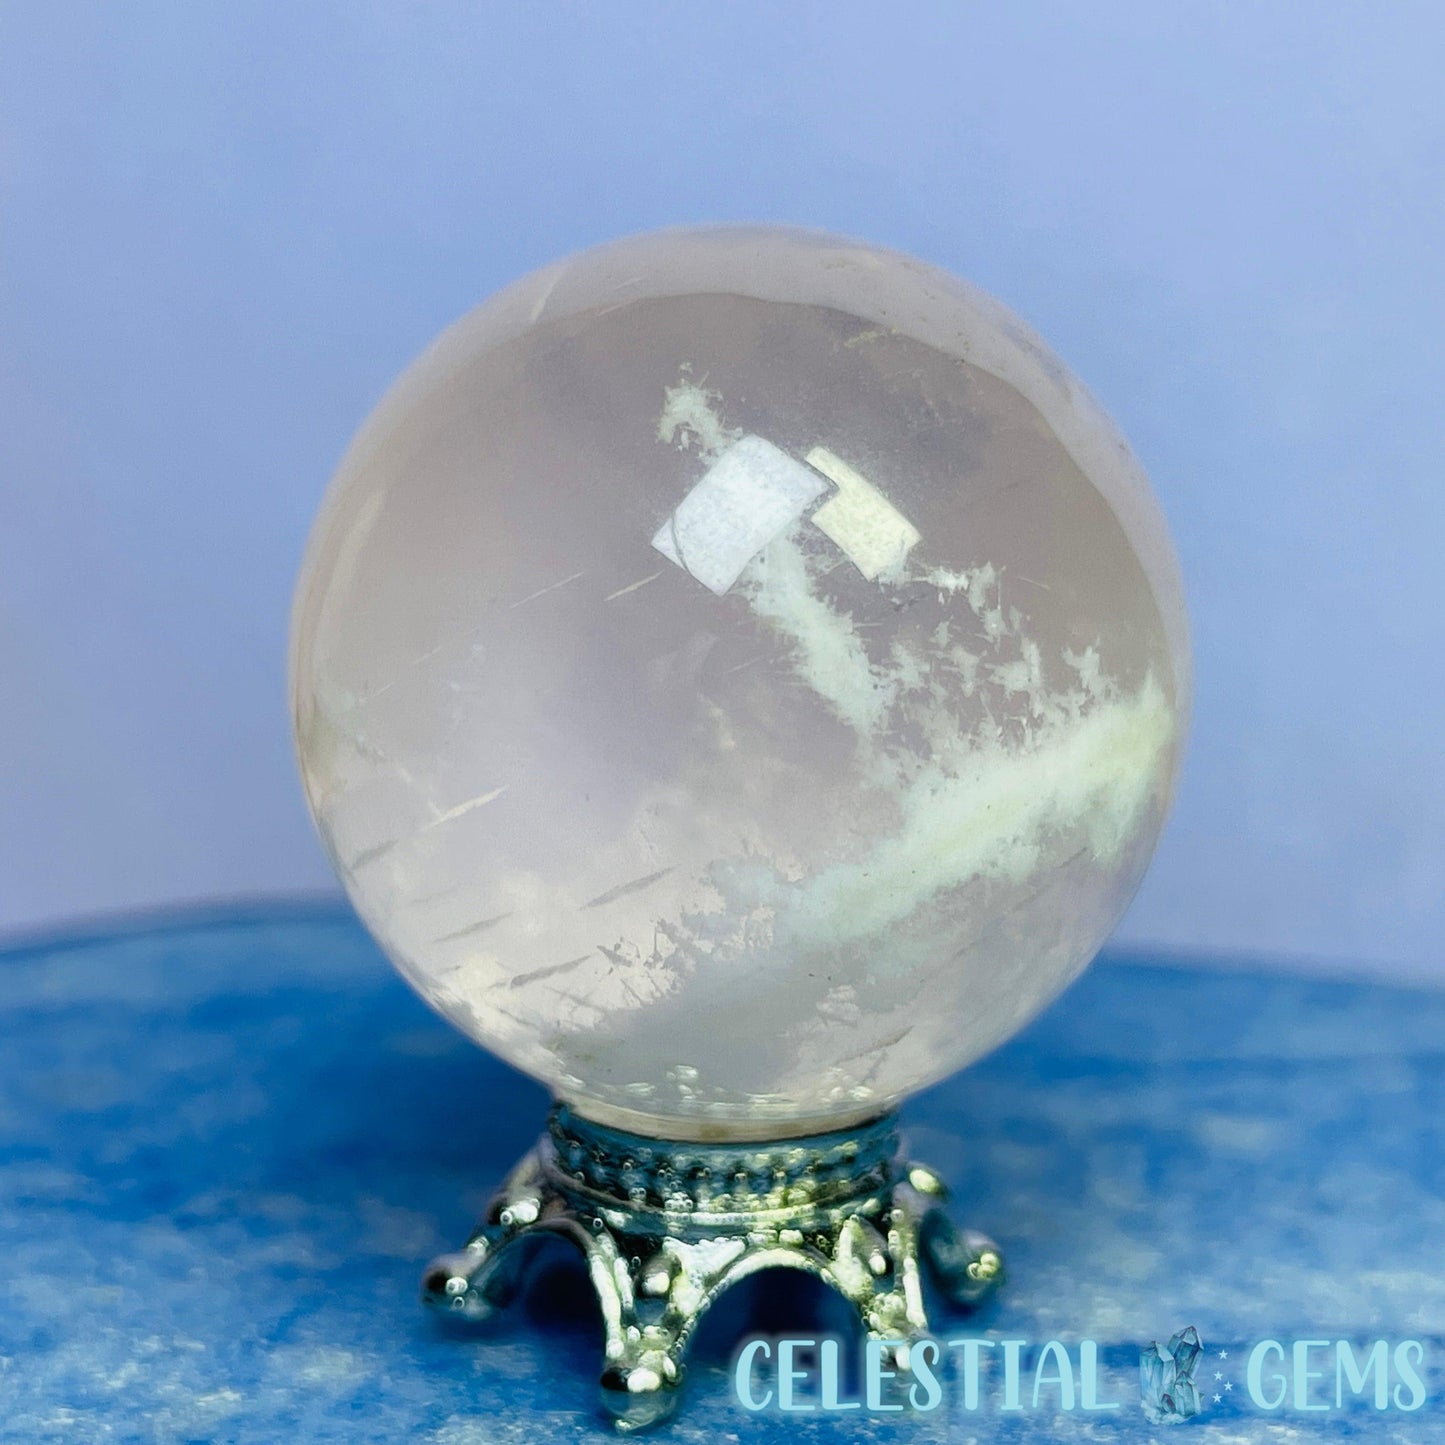 Very Rare Phantom Feather Snow Rose Quartz Small Sphere with Star Flash FRQ1